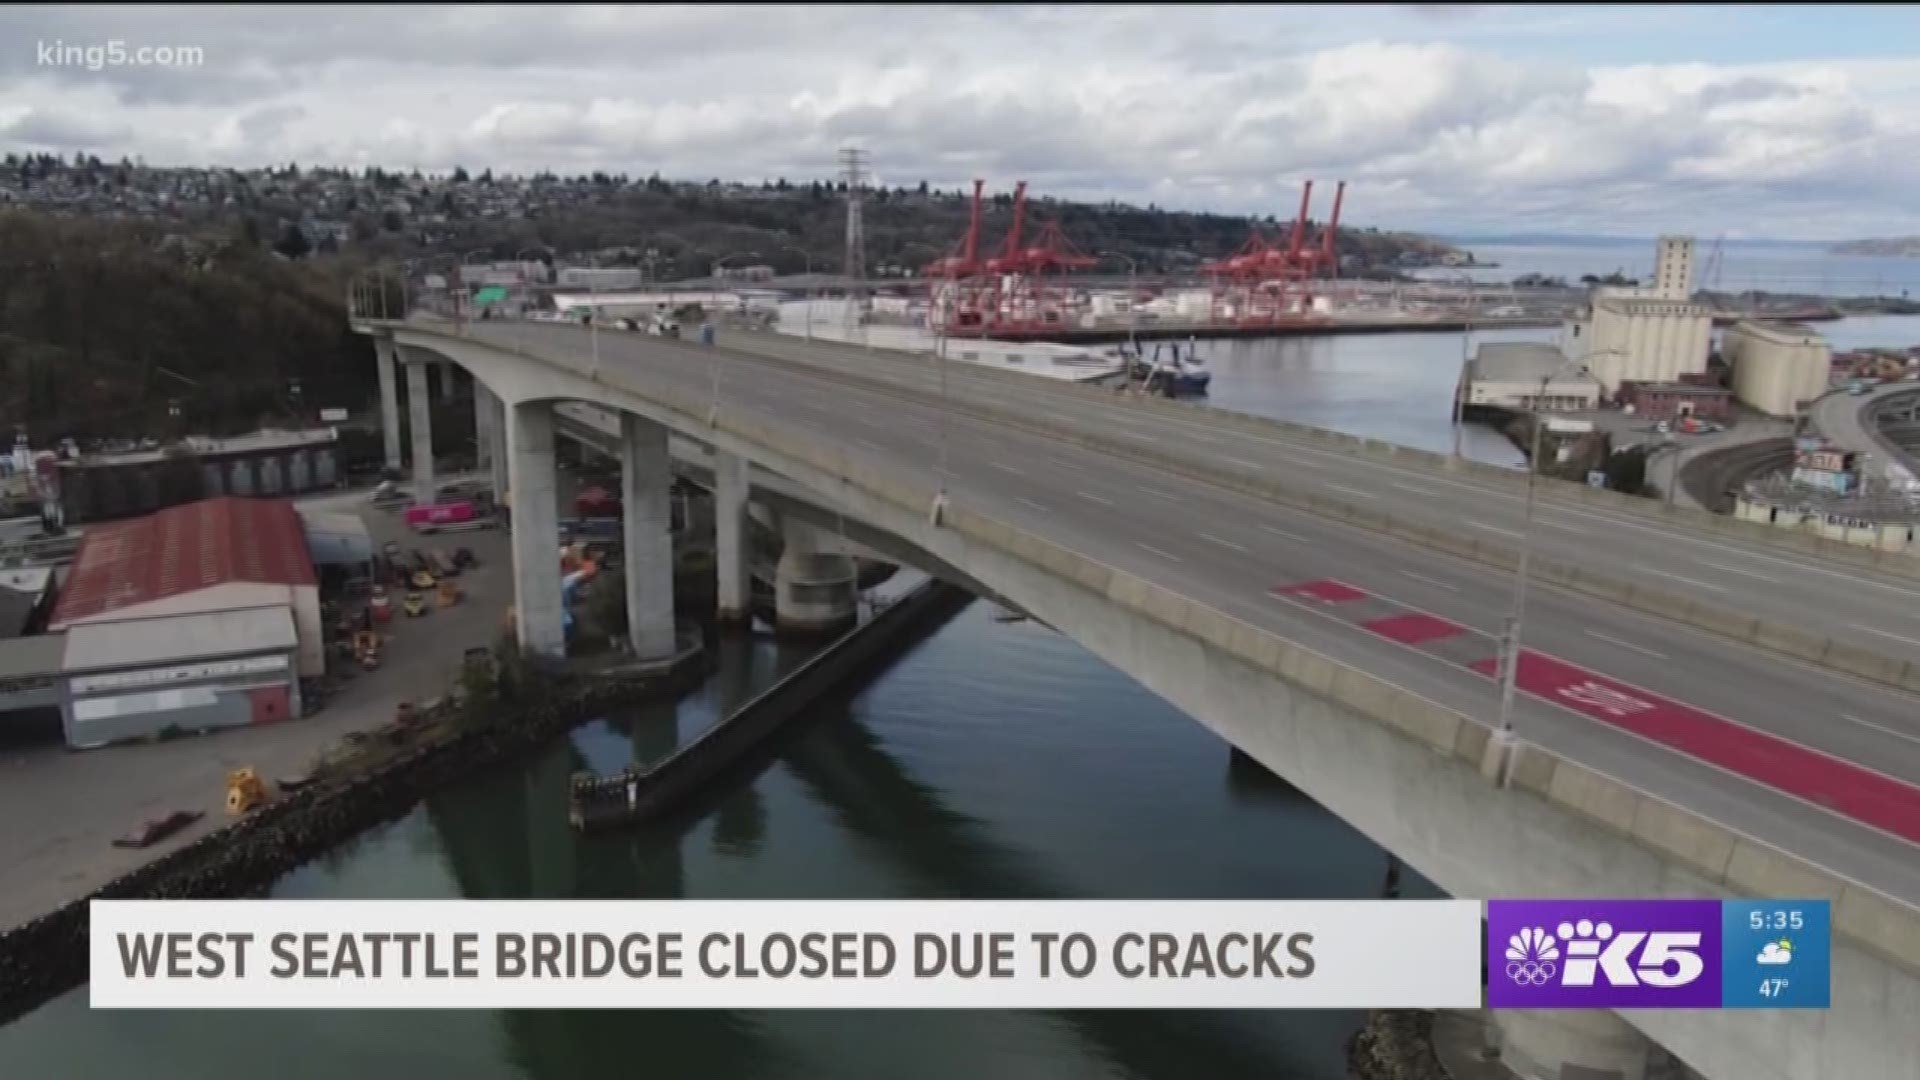 The high bridge shutdown yesterday out of an abundance of caution when cracks were found.